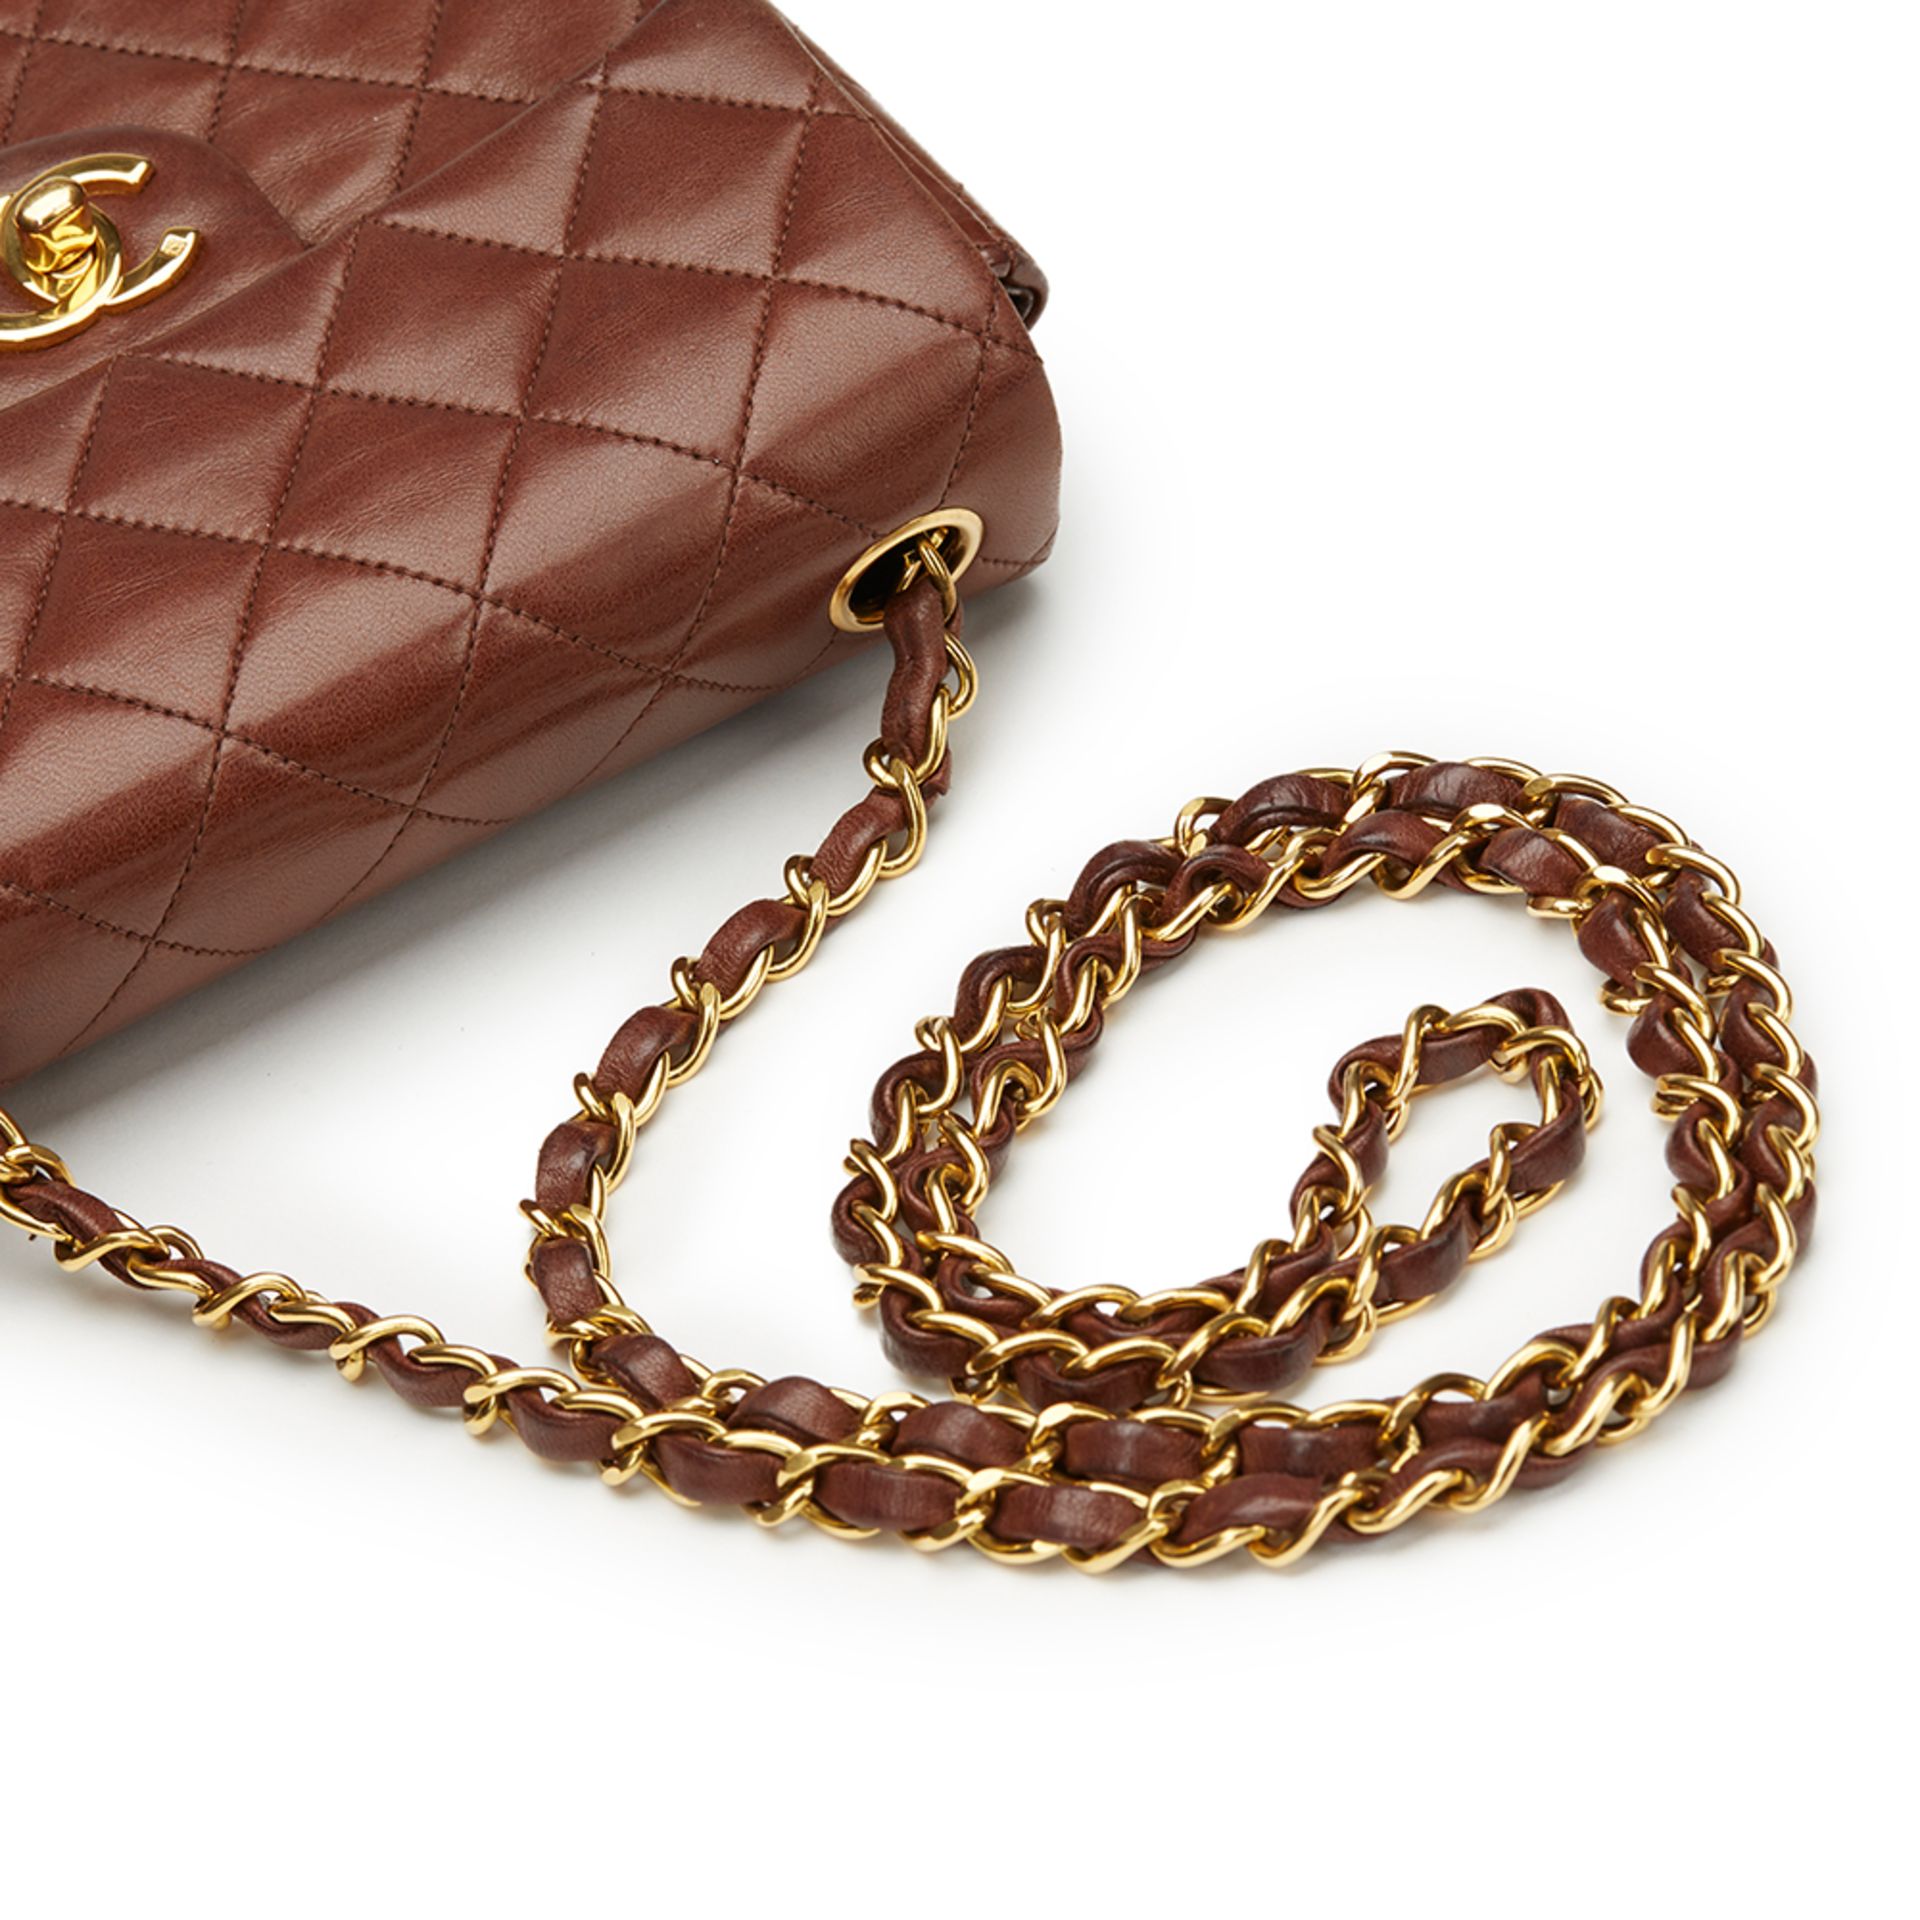 Chanel Mini Flap Bag - Image 7 of 11